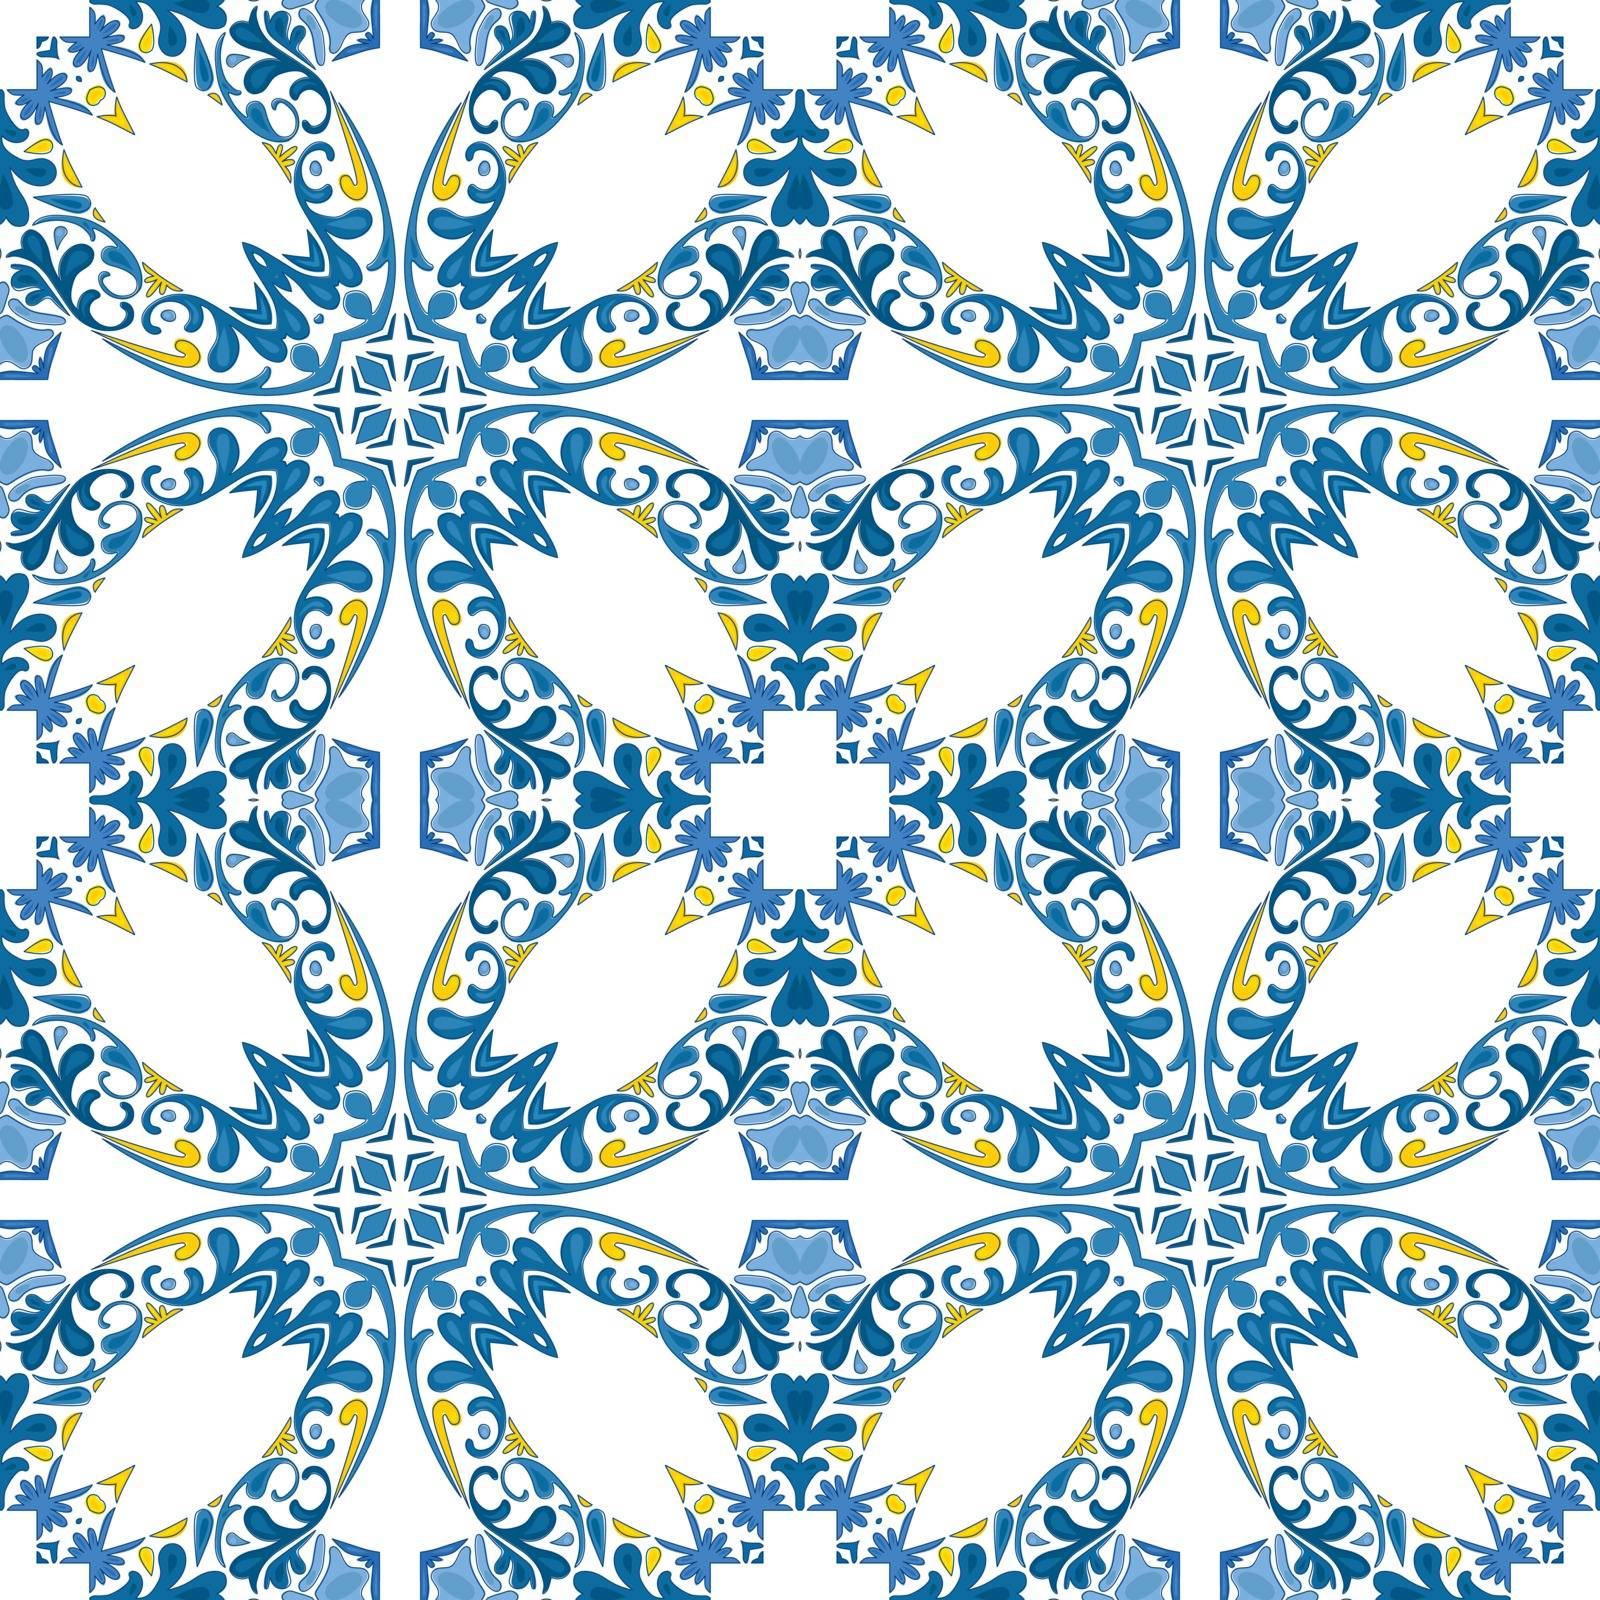 Portuguese tiles by nahhan